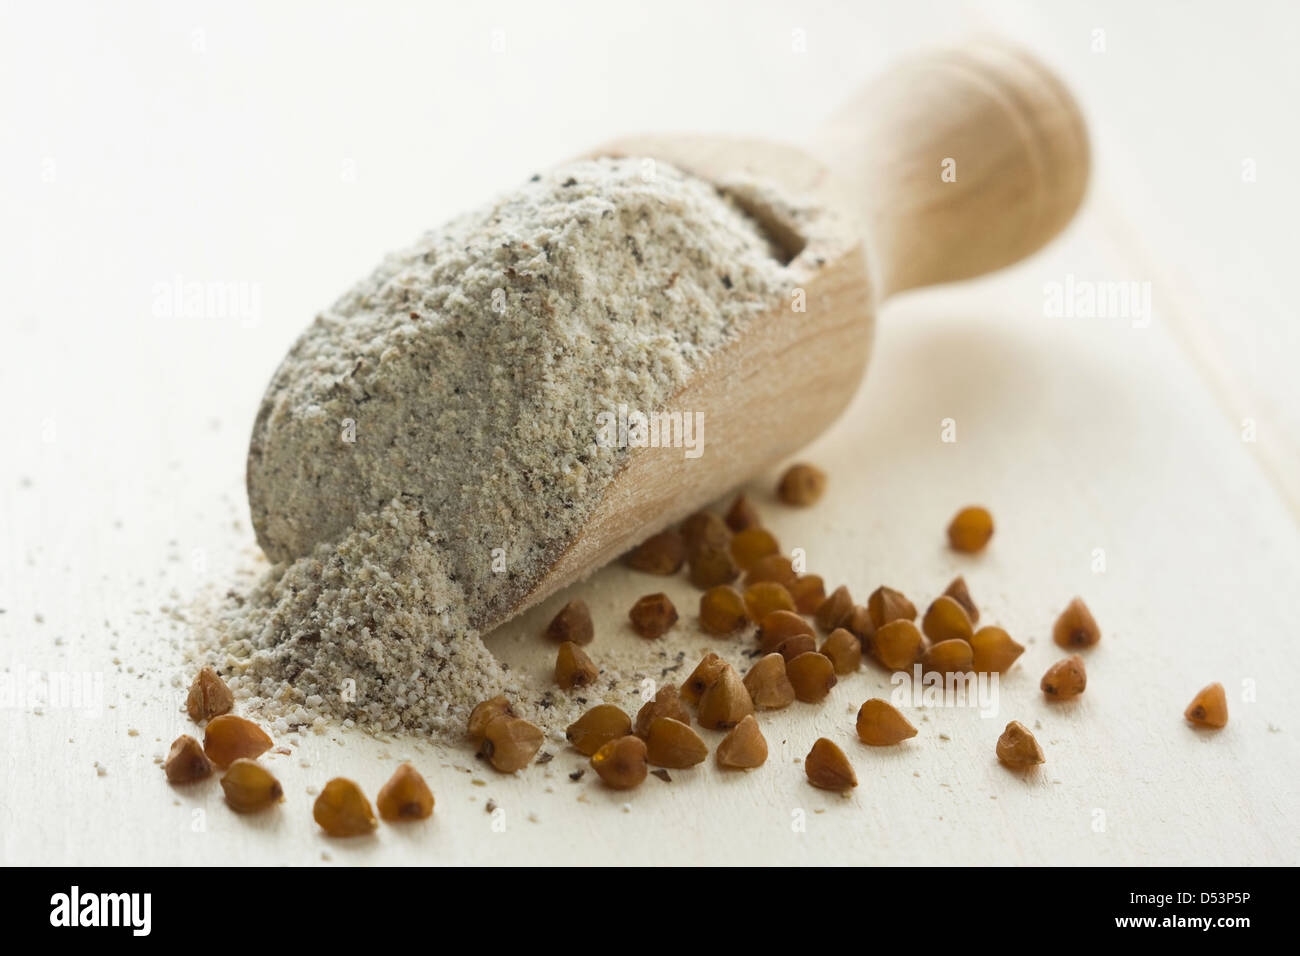 Buckwheat flour and buckwheat cereal. Stock Photo